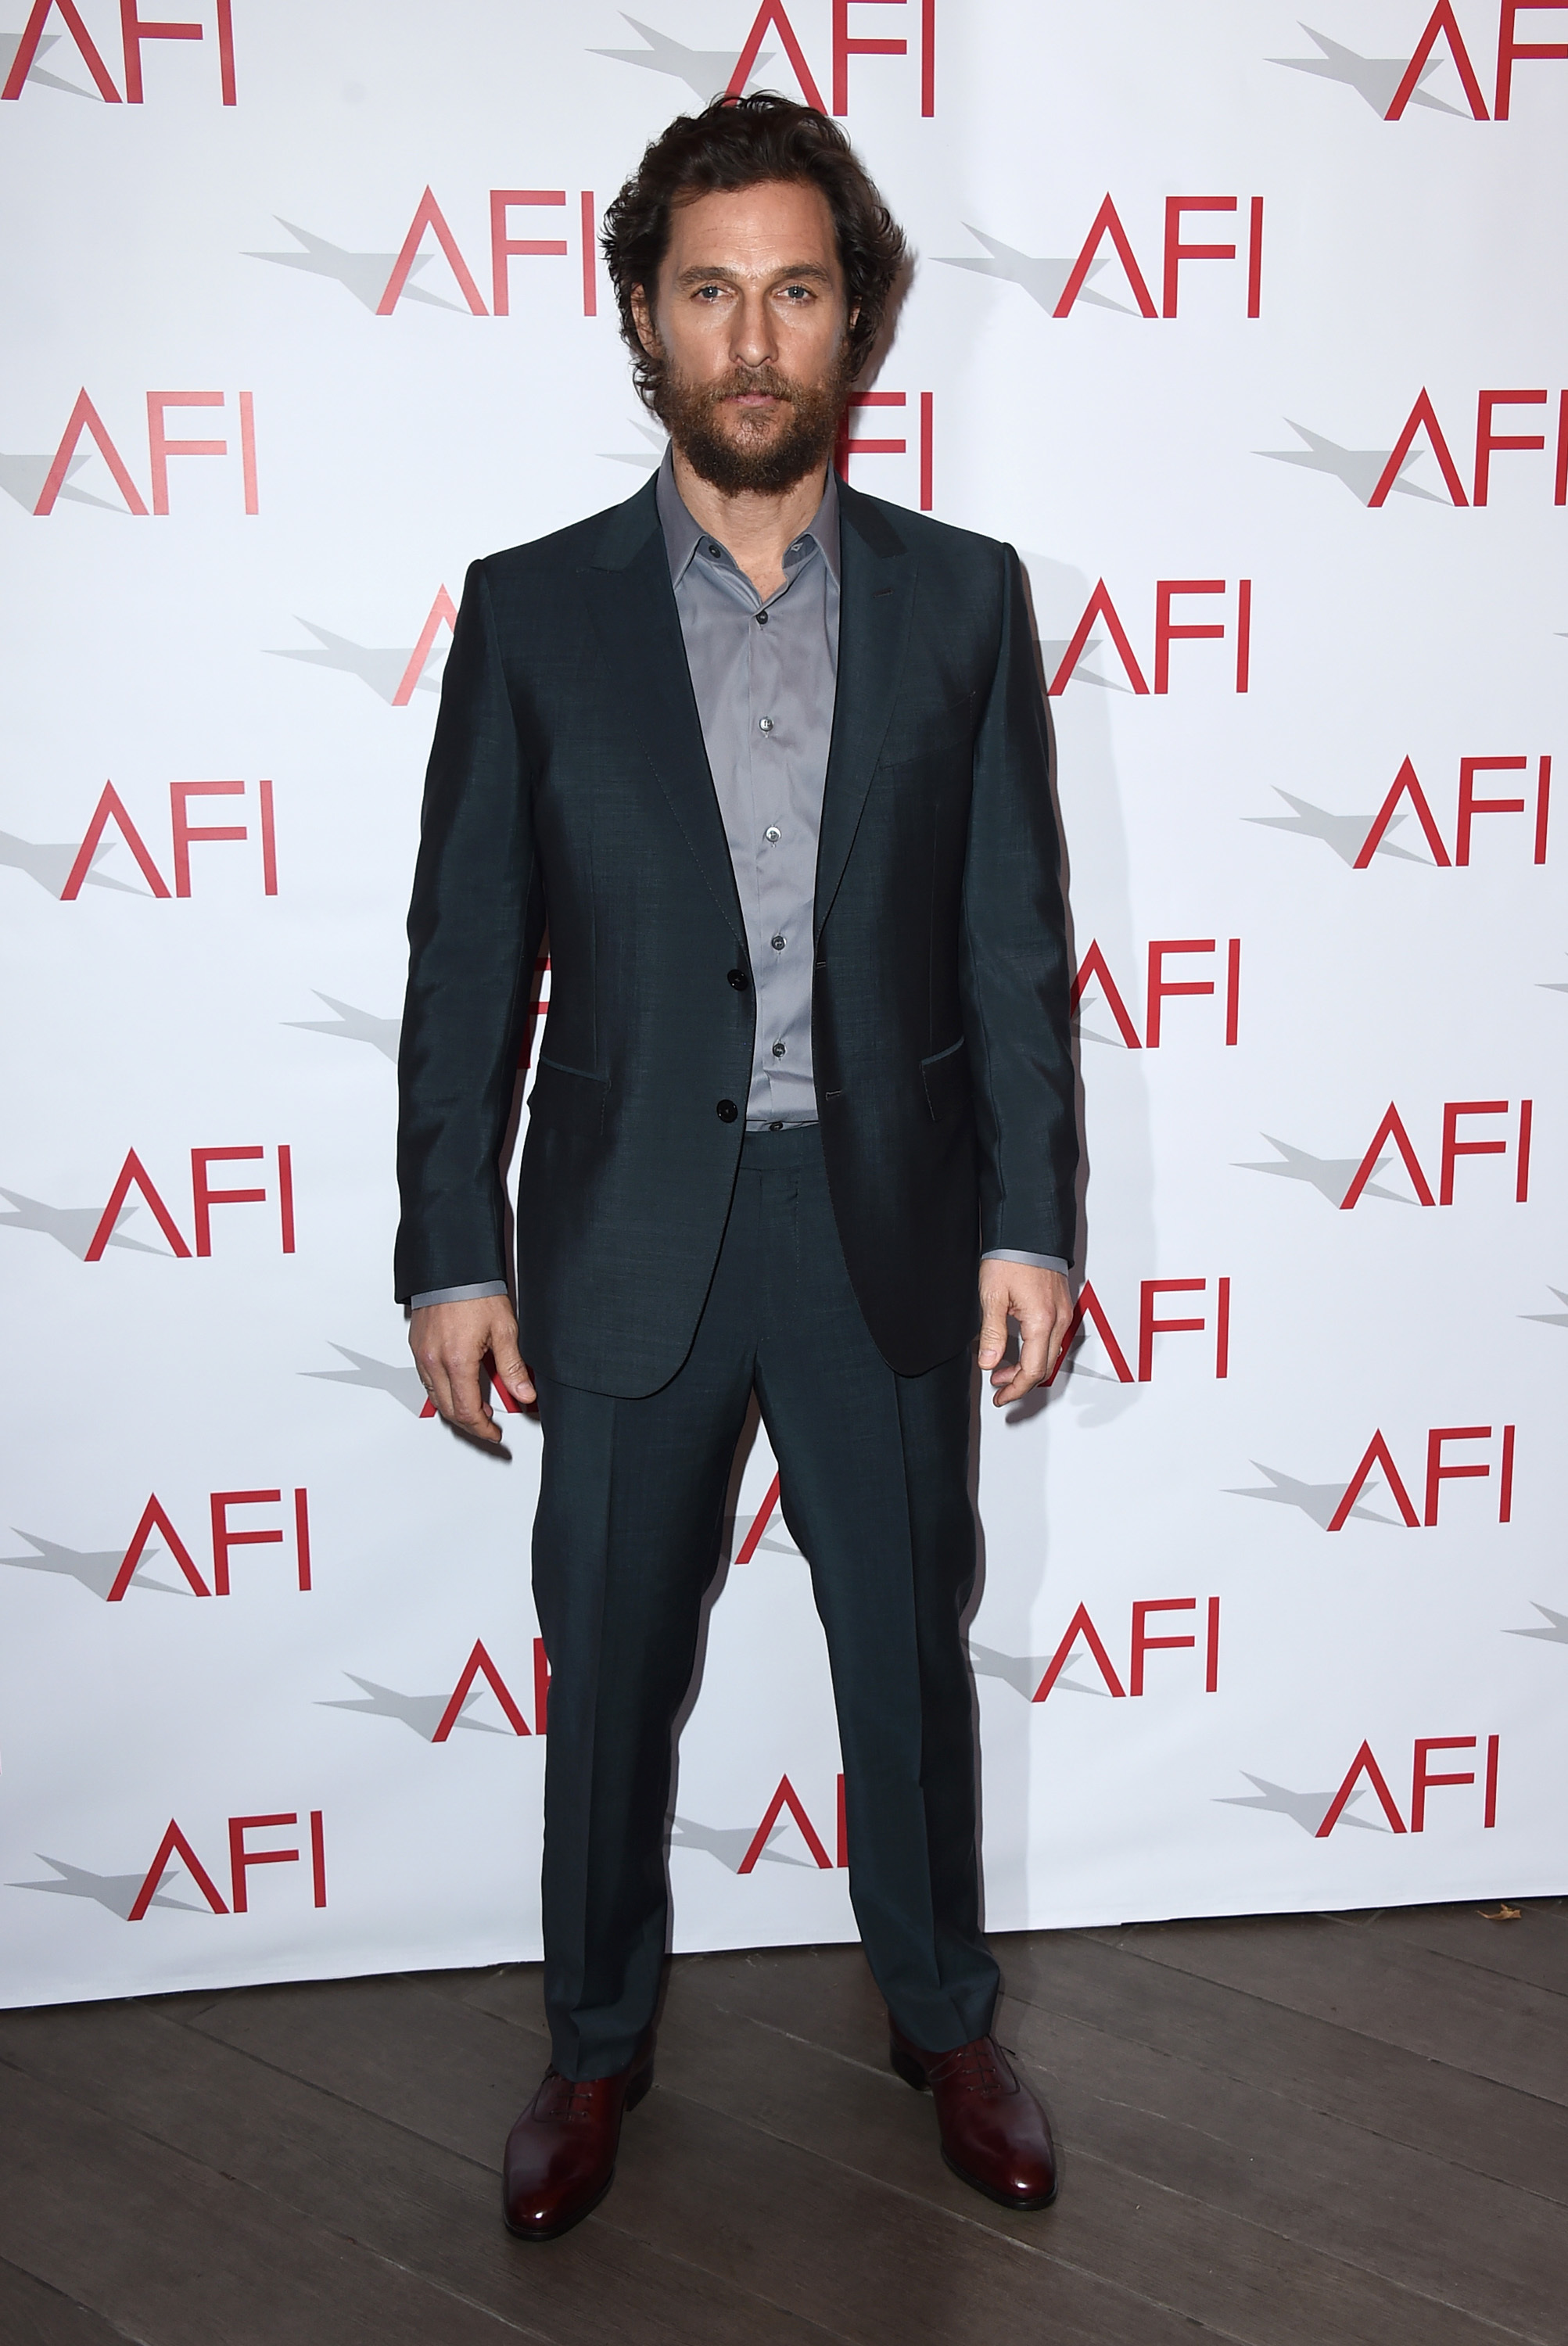 Stars attend the 2014 AFI Awards | Gallery | Wonderwall.com